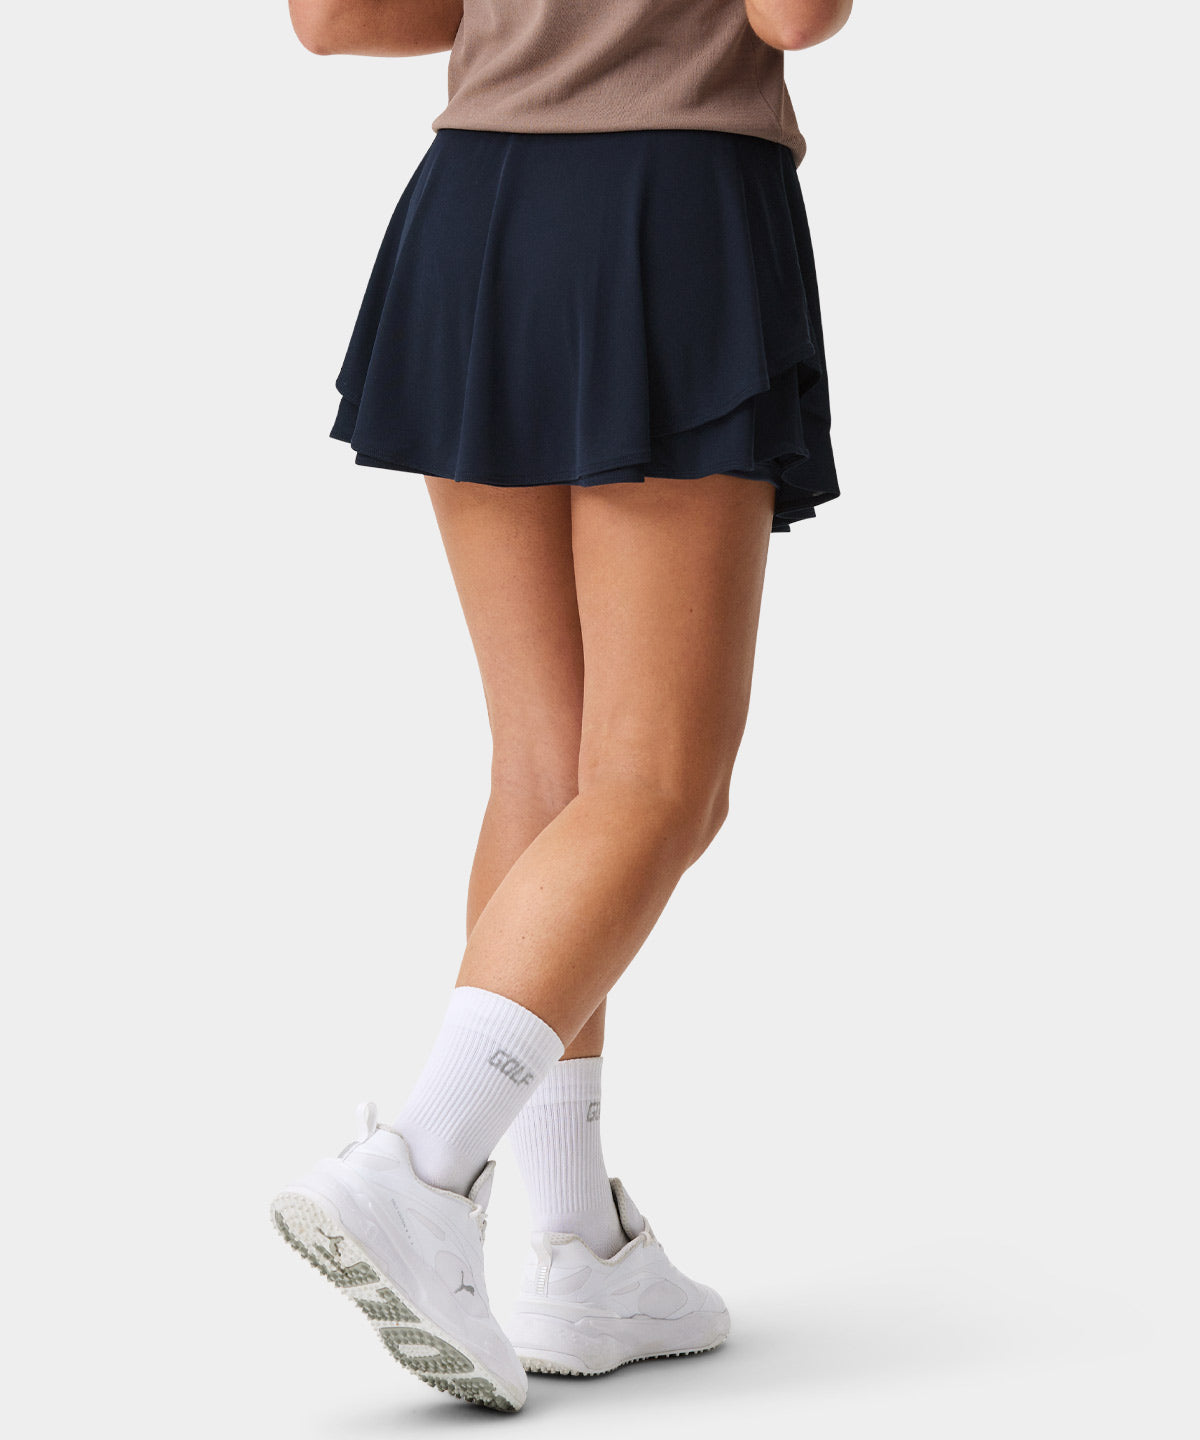 Cleo Navy Tour Skirt